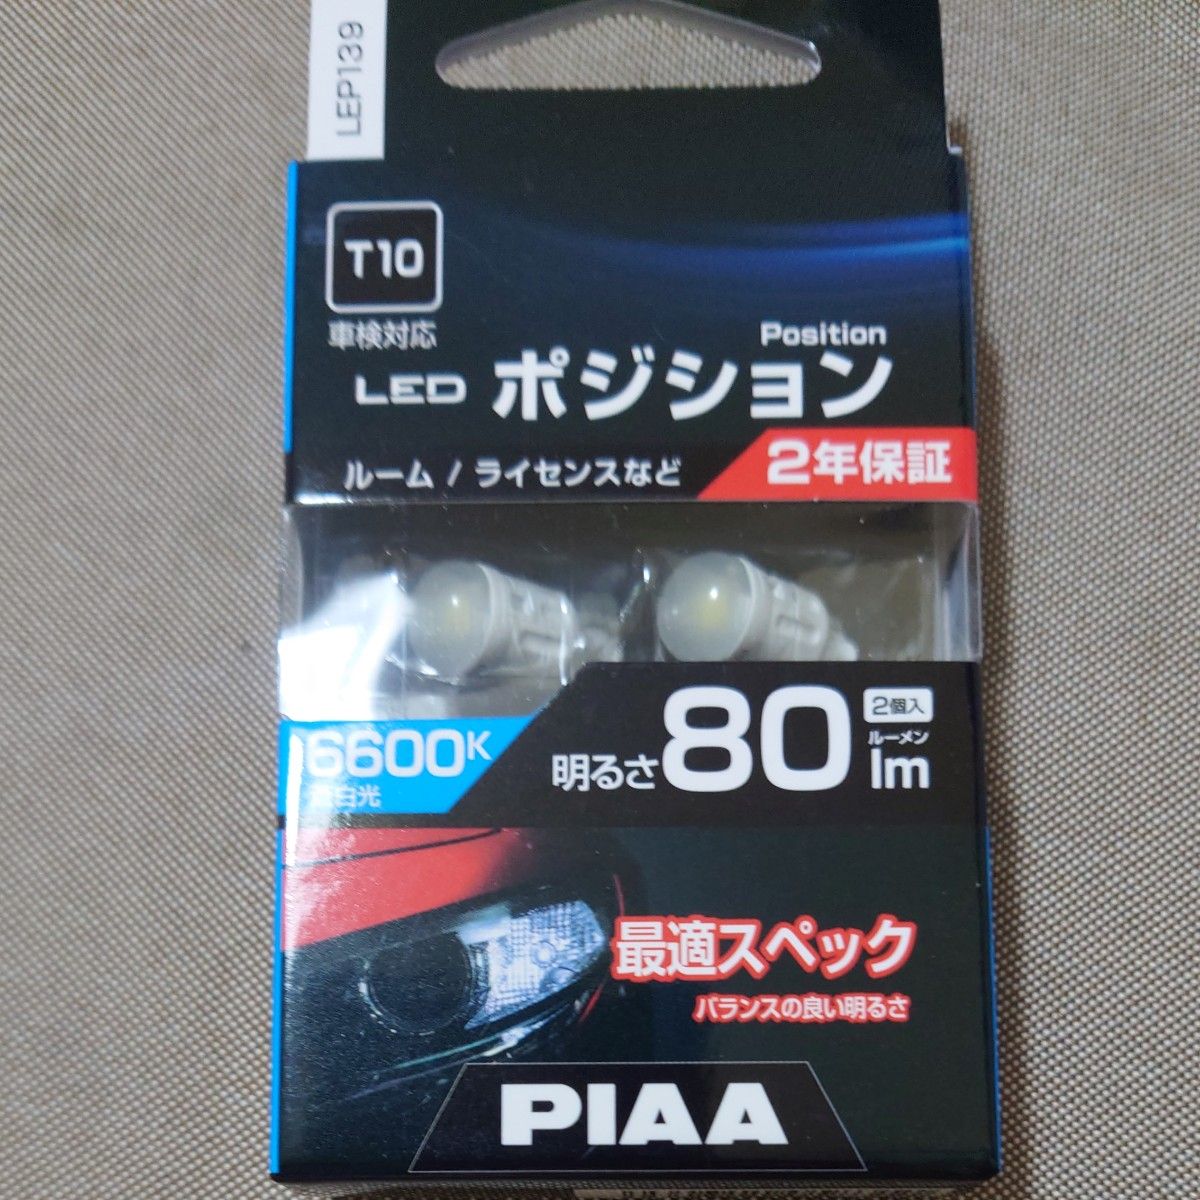 PIAA LEDポジション 透明蒼白 80lm 6600K 2個 T10 LEP139